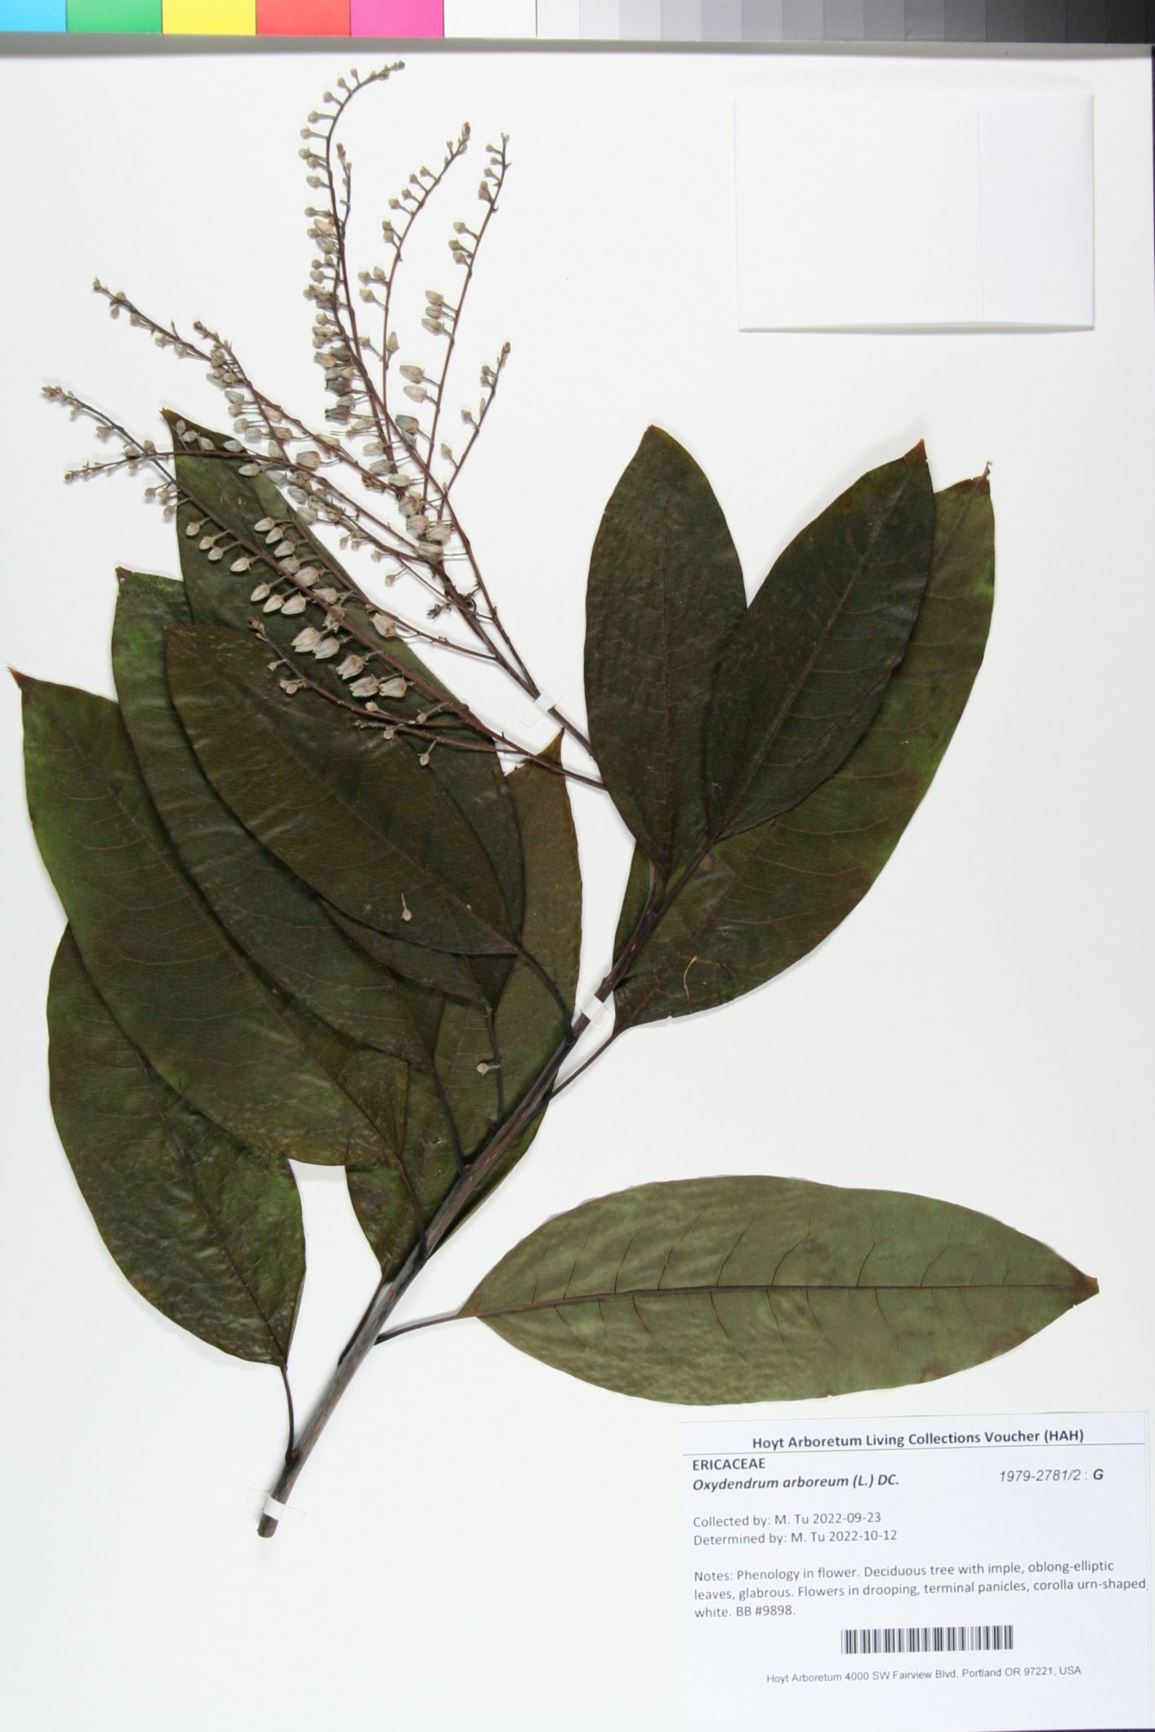 Oxydendrum arboreum - sourwood, sorrel tree, lily-of-the-valley tree